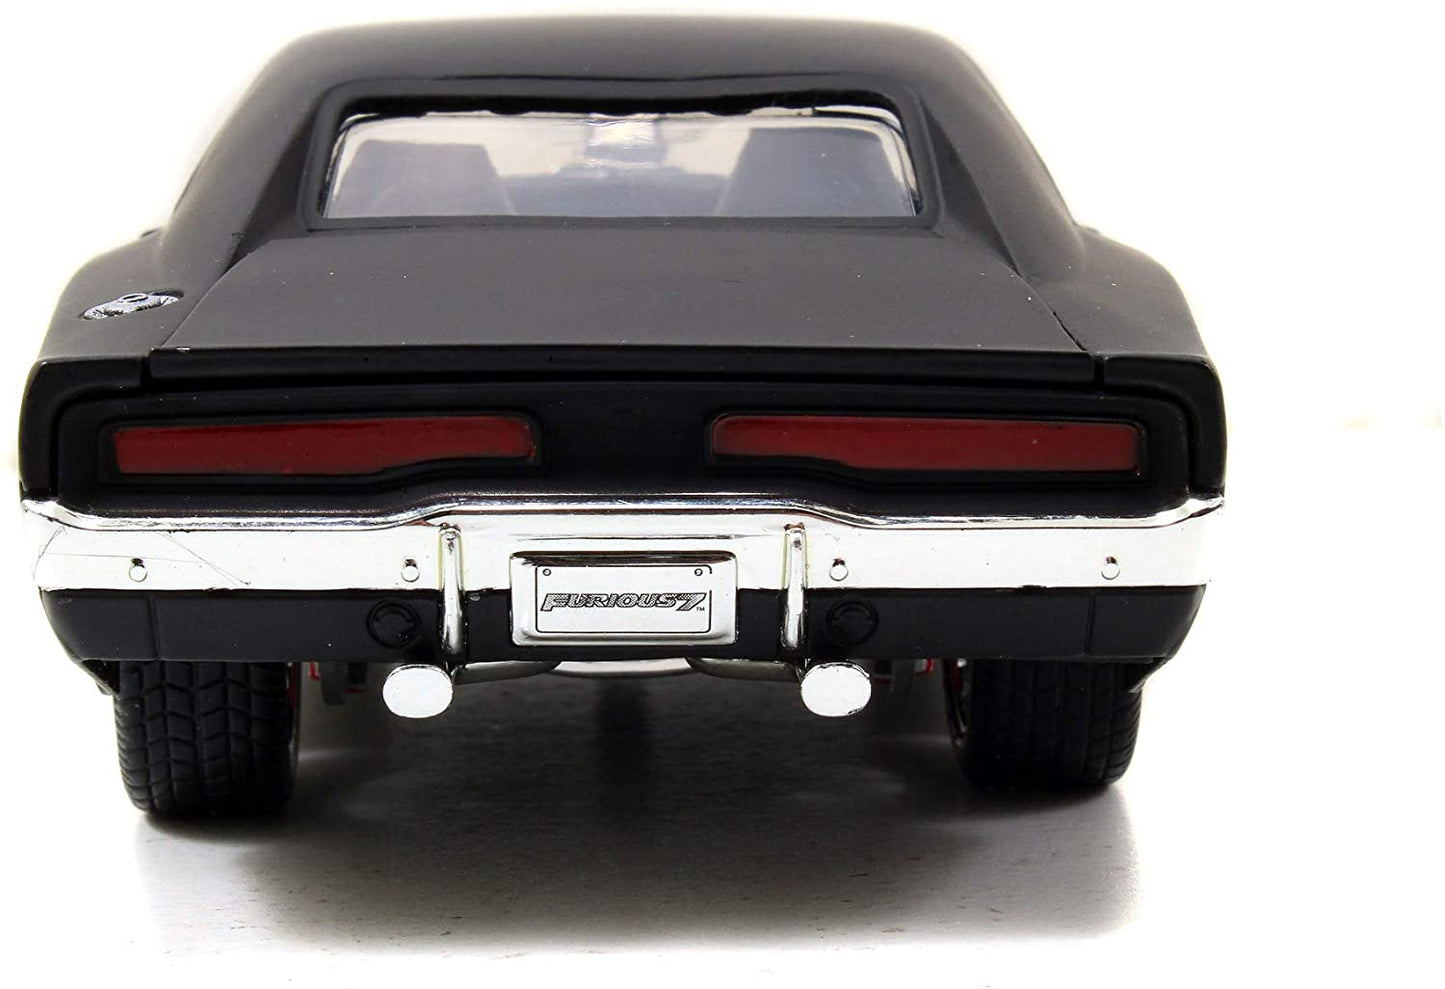 FAST & FURIOUS - Réplique métal Dodge Charger Wideboy 1968 - 1/24 - Jada Toys